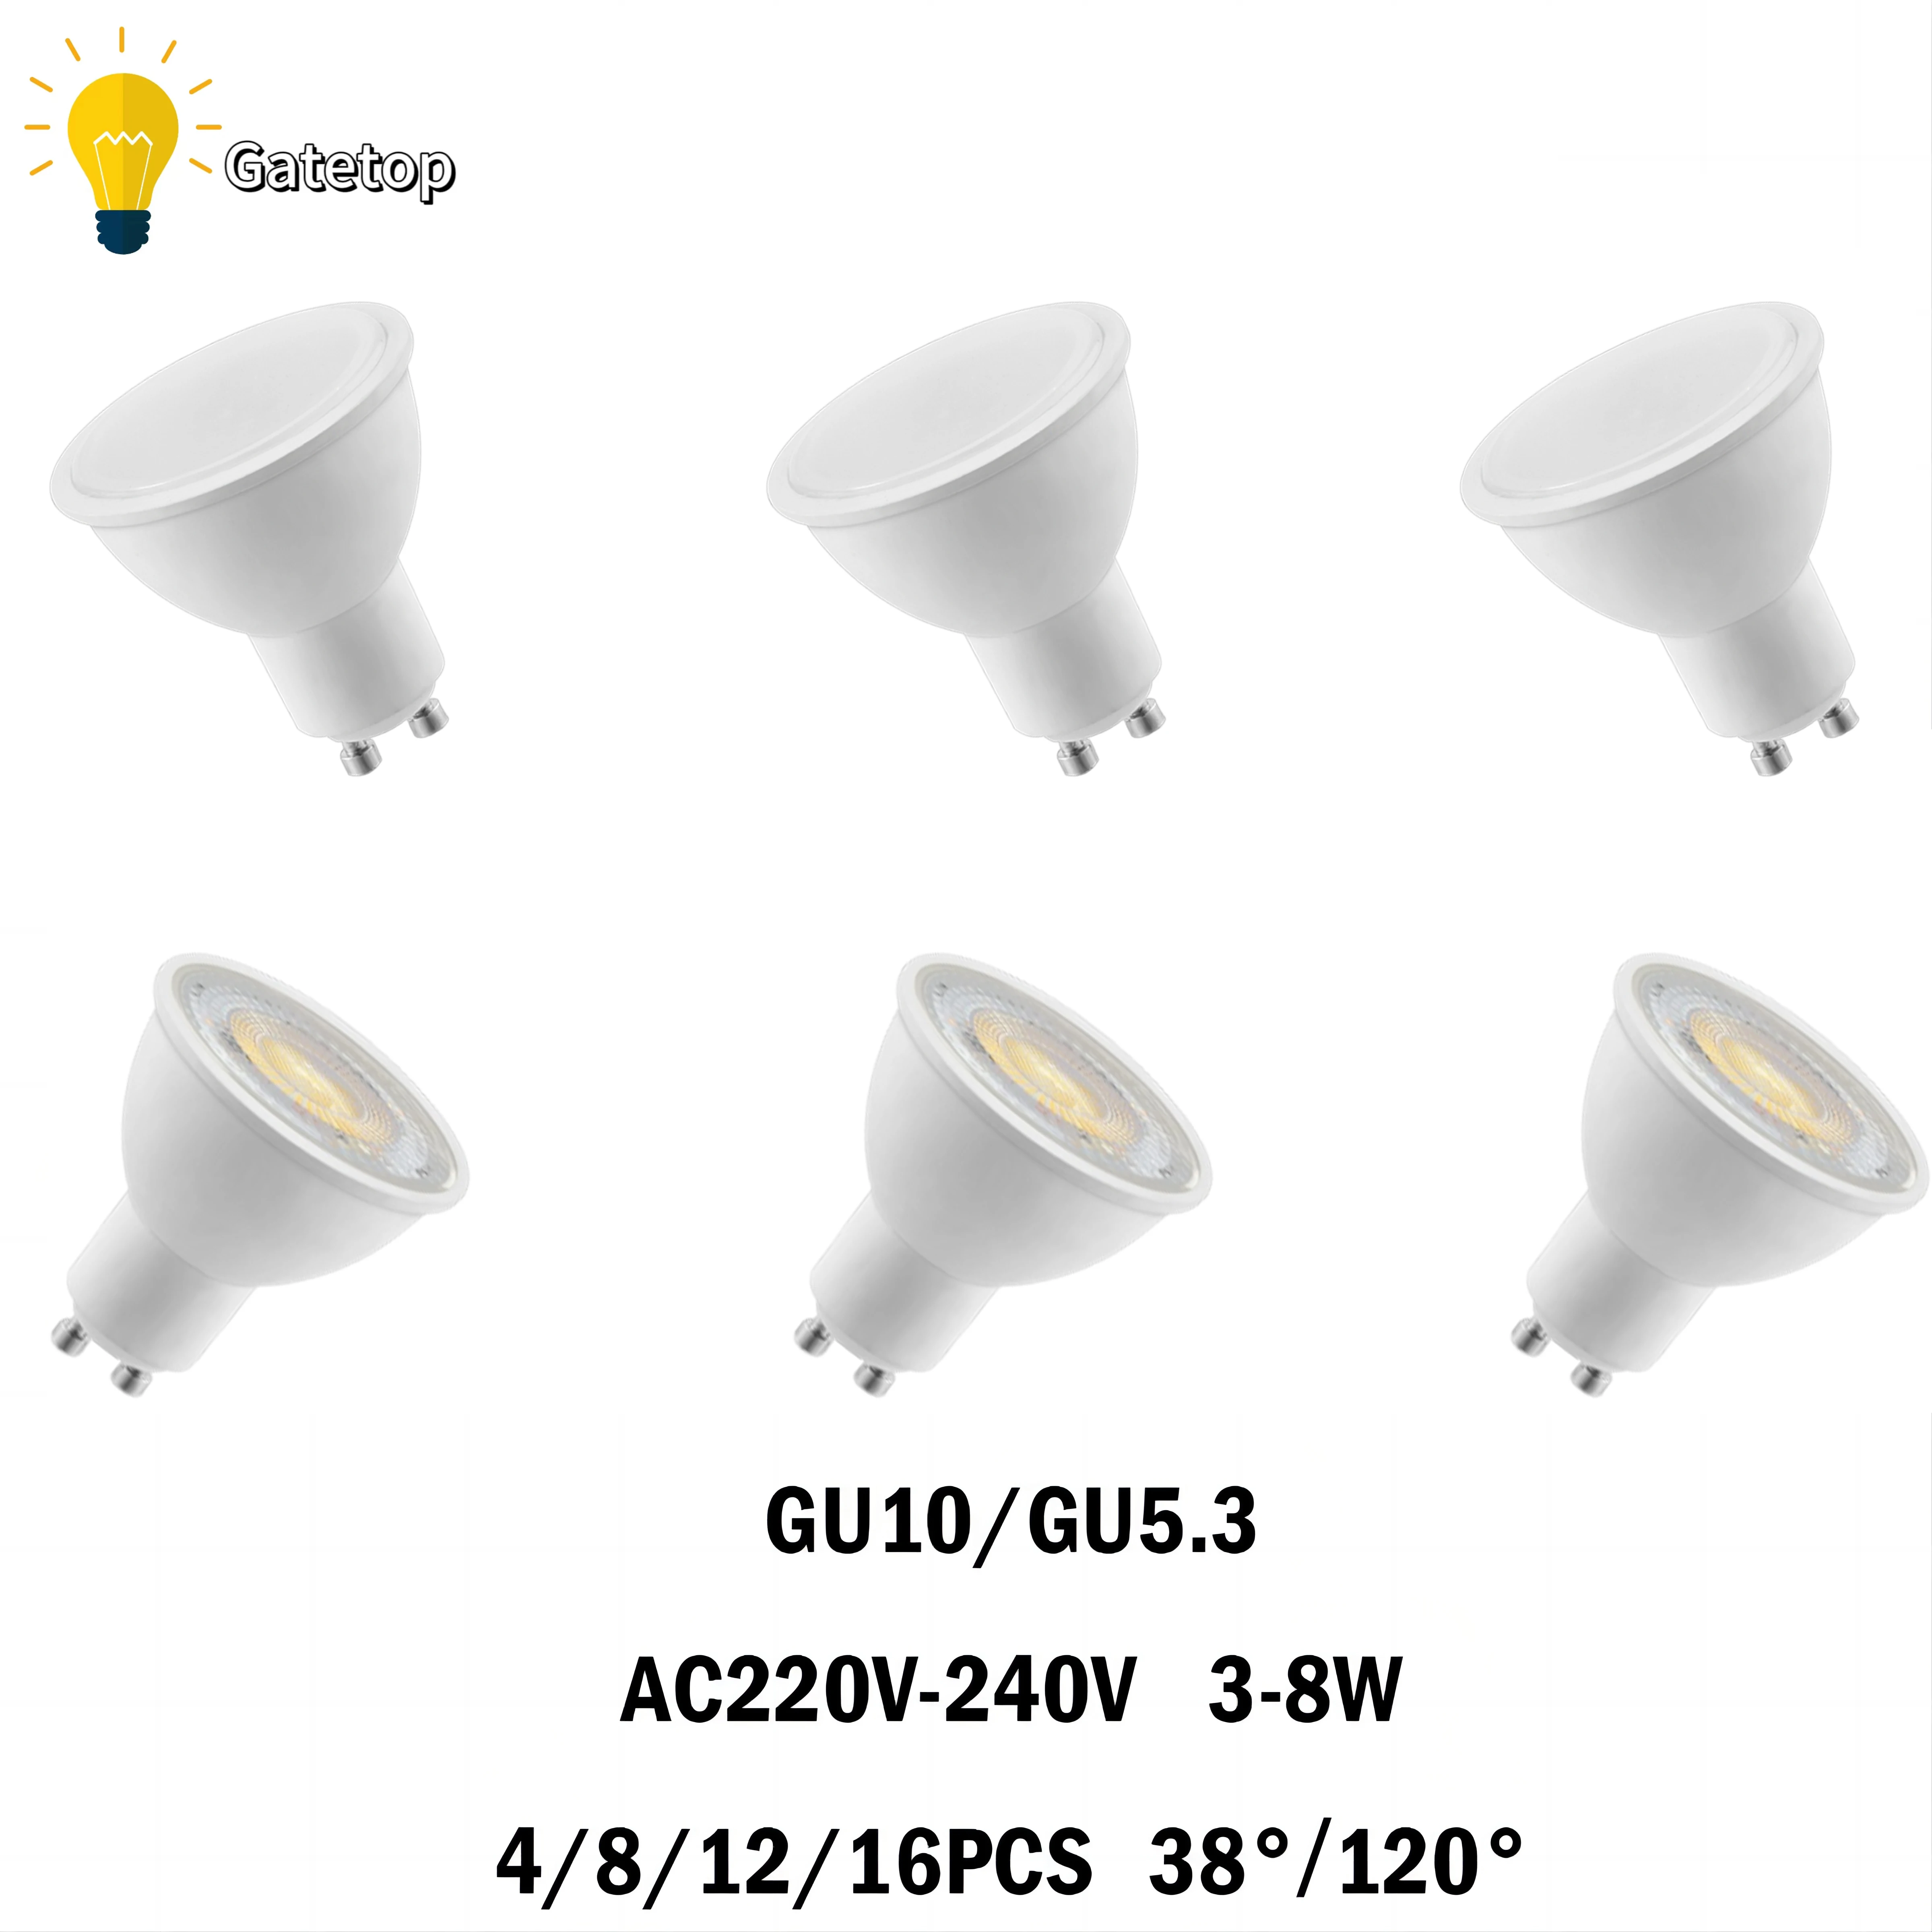 

LED Spotlight GU10/GU5.3 AC220V 3-8W High Lumen No Flicker 3000K/4000K/6000K Replace 20W/50W Halogen Lamp for Interiors Lighting